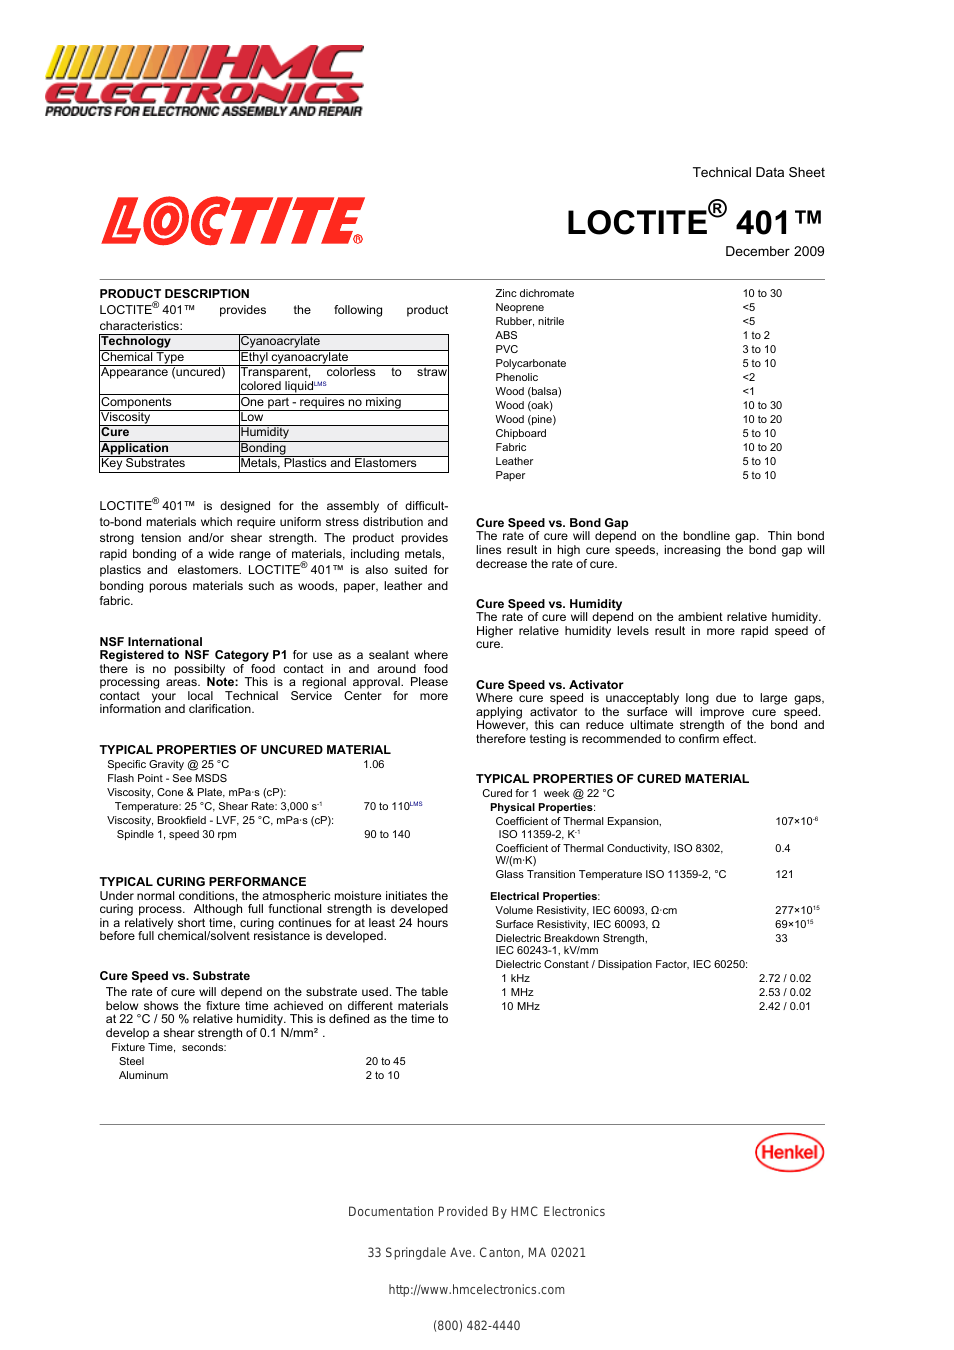 40140 Loctite 401 Prism Instant Adhesive, Surface Insensitive, General Purpose